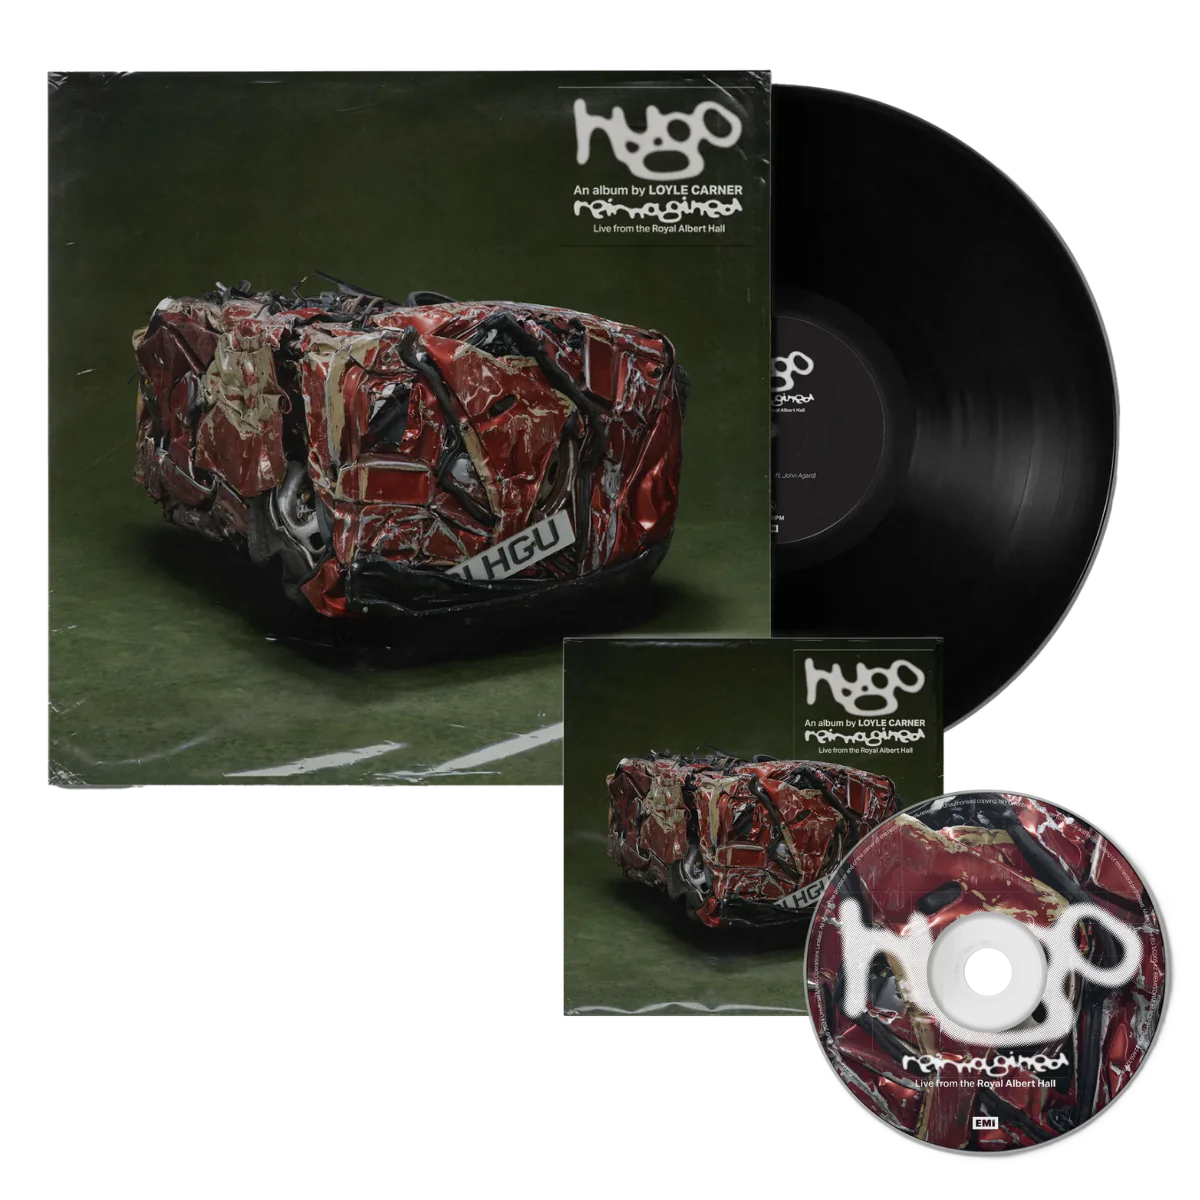 Hugo - Re-imagined (Live from The Royal Albert Hall): Vinyl LP + CD